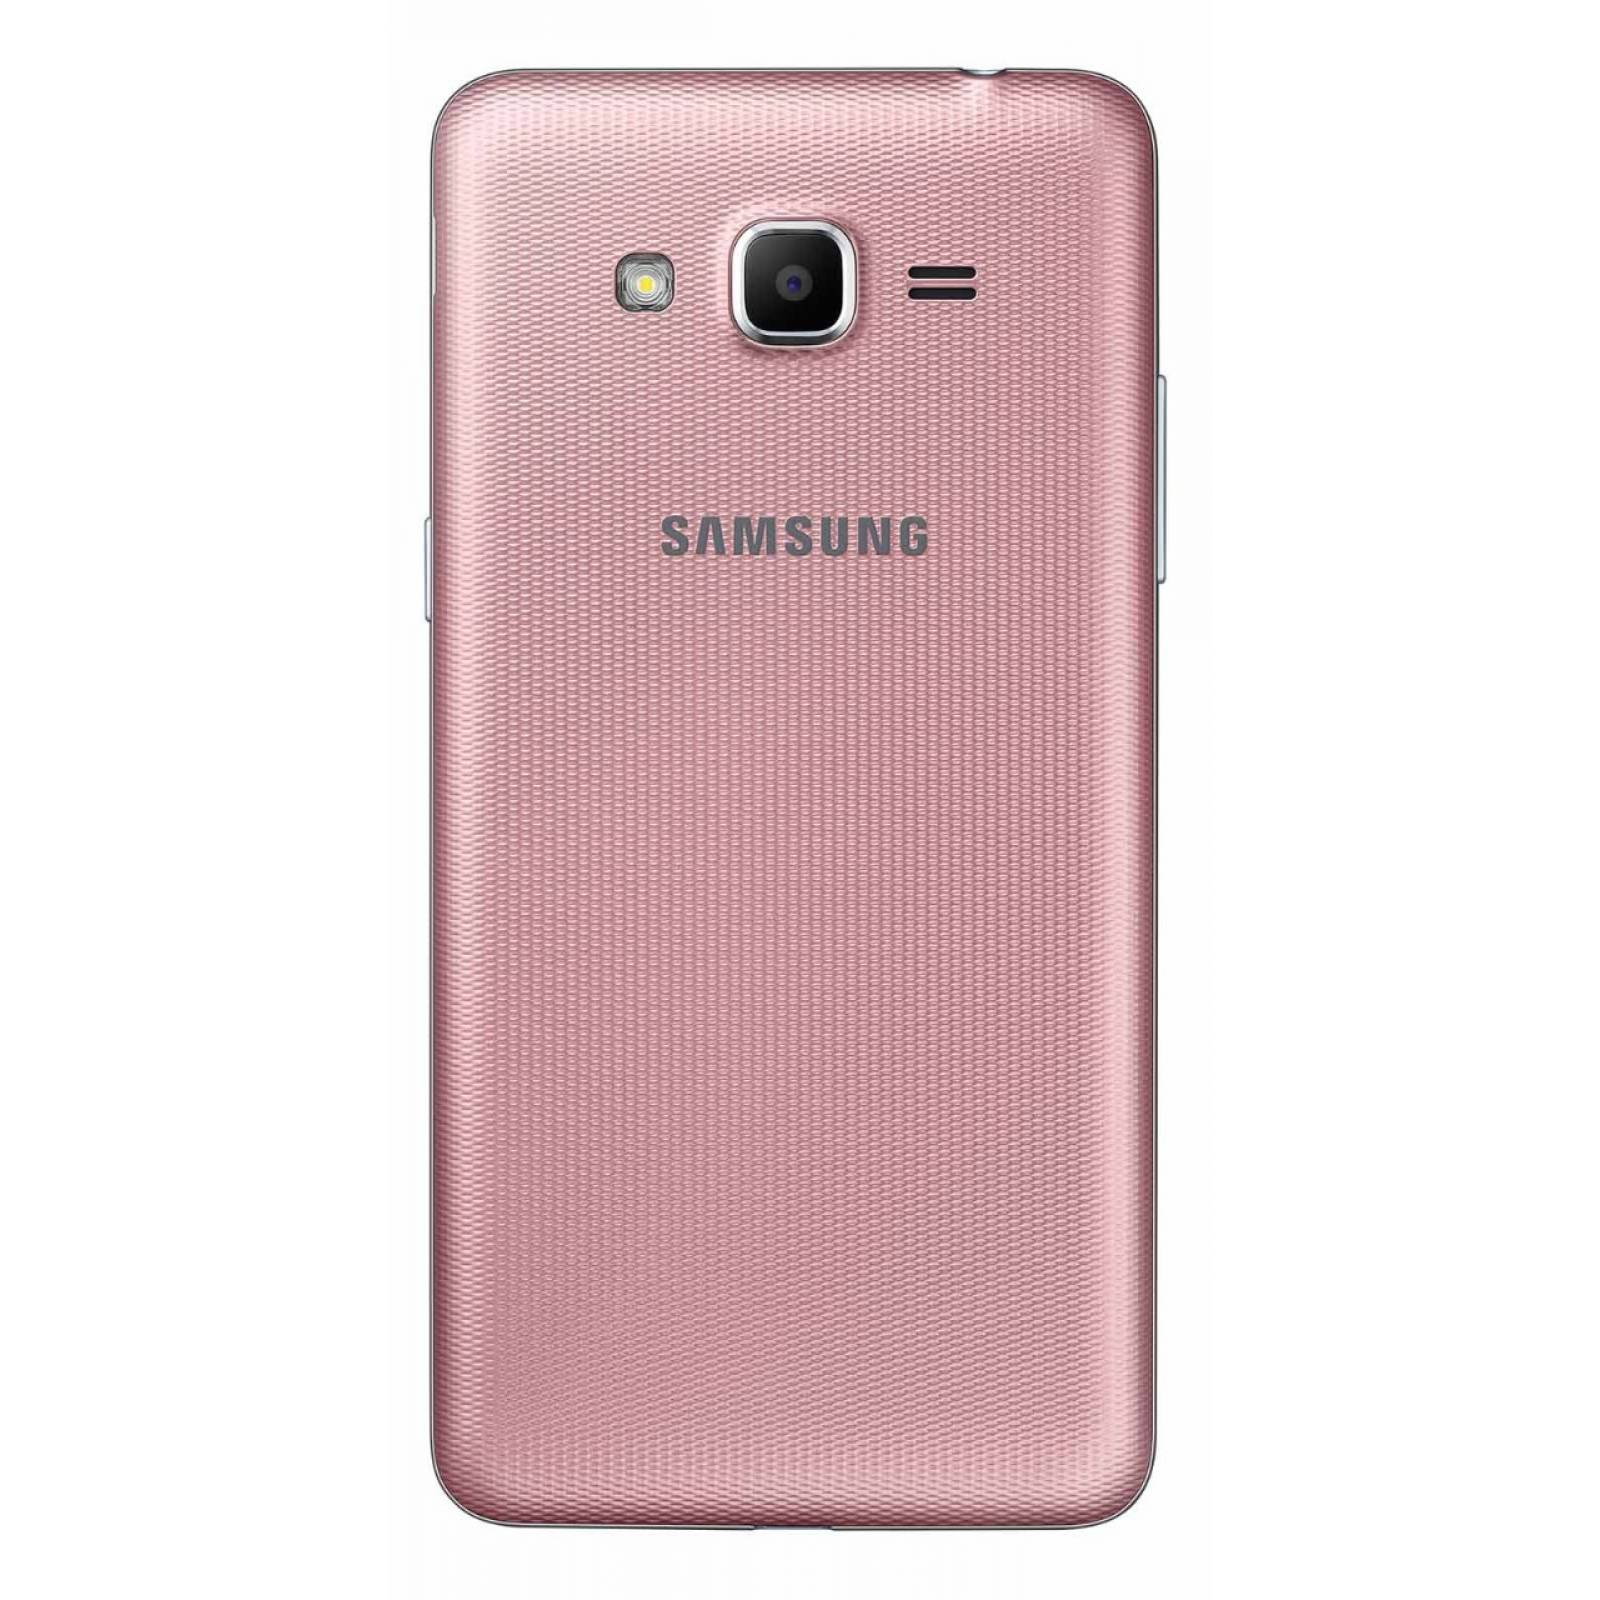 Celular LTE 16GB GALAXY GRAND PRIME + Color Rosa (Telcel)